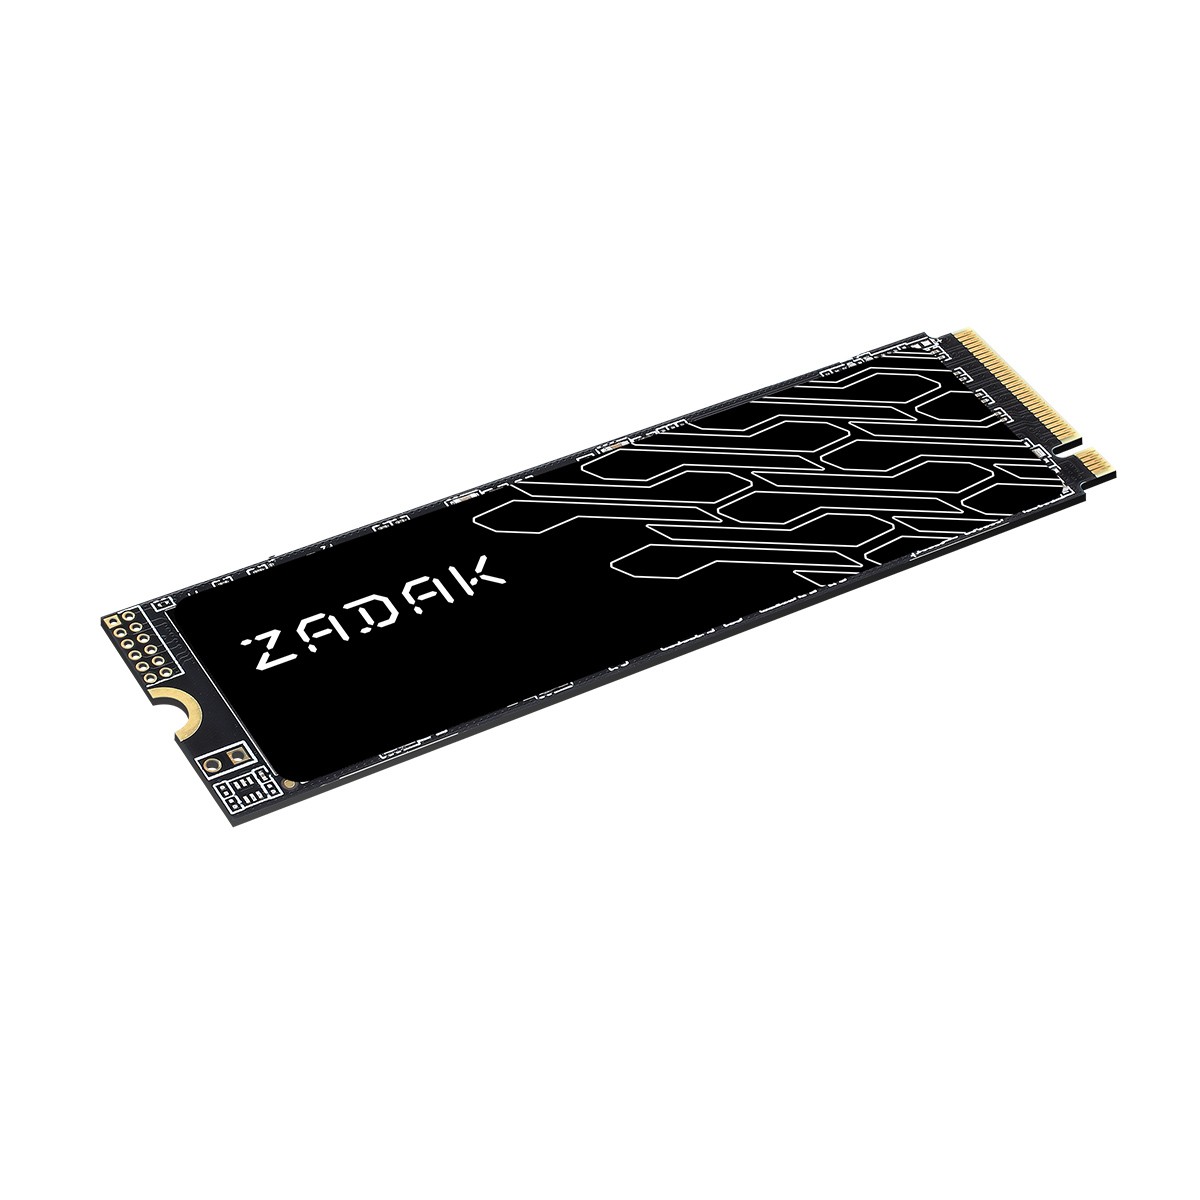 SSD Zadak TWSG3 128GB, PCIe Gen 3x4 M.2 NVMe, Leitura 3500MBs e Gravação 3200MBs, ZS128GTWSG3-1